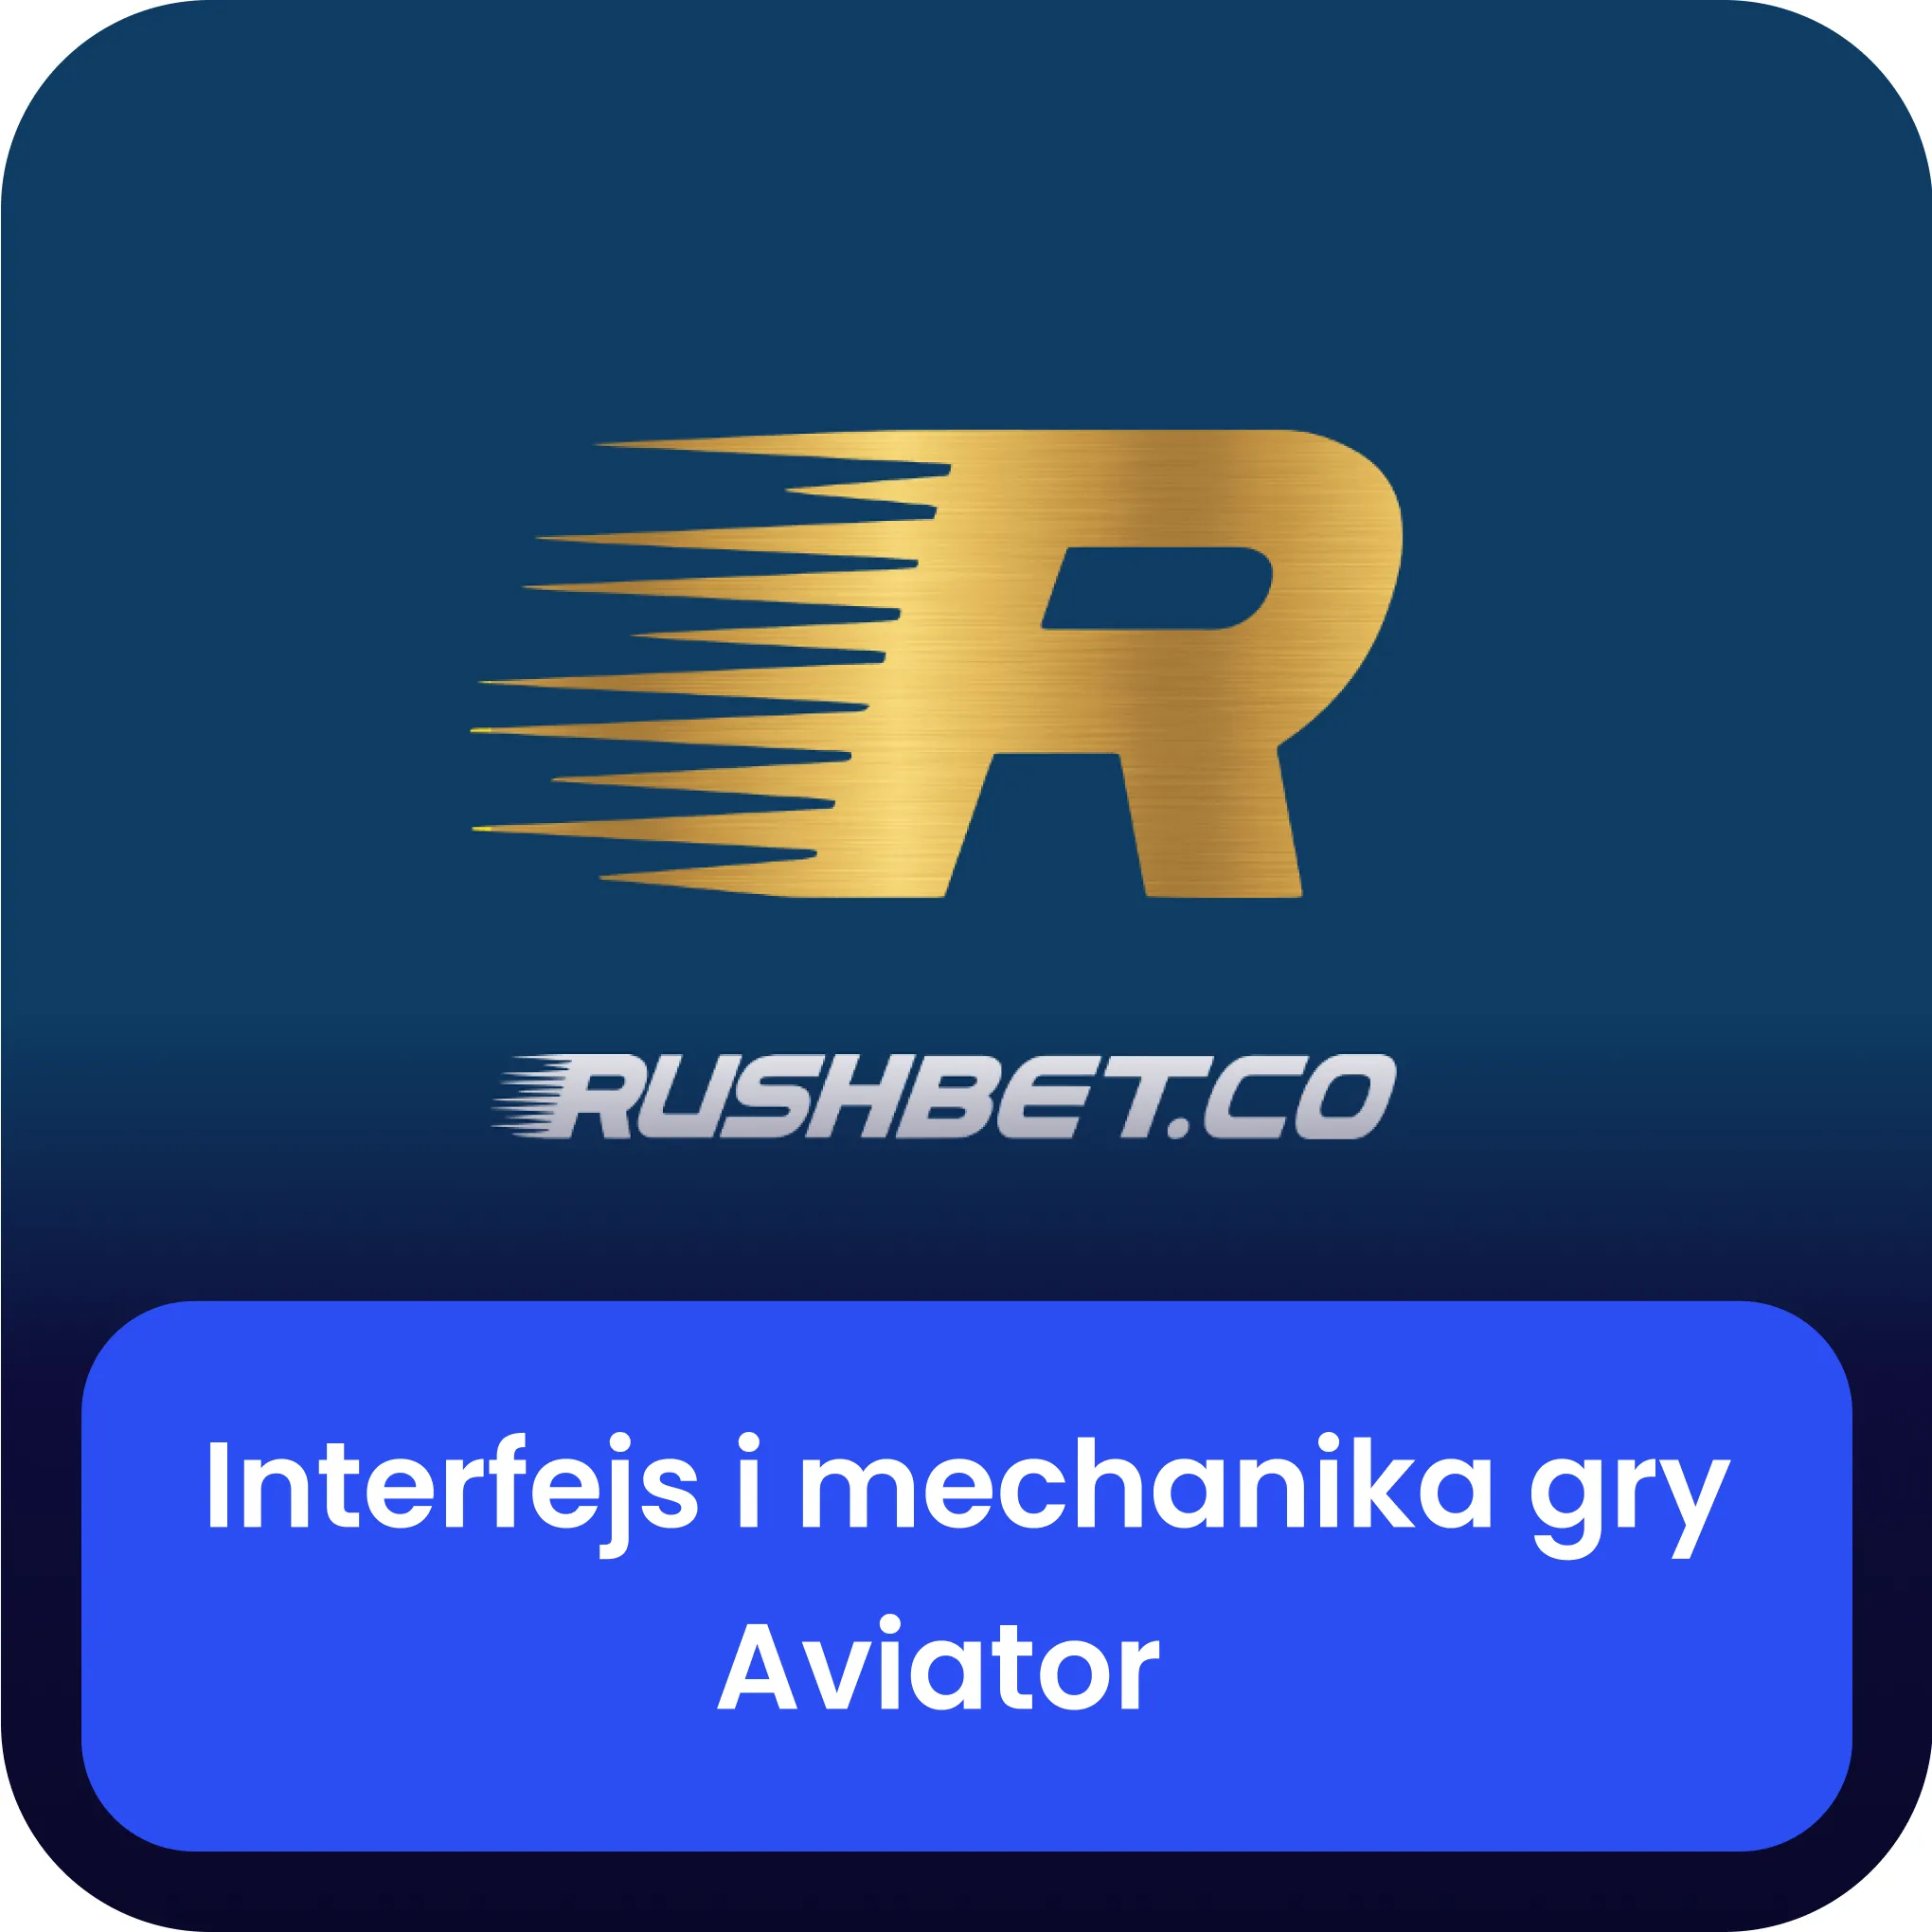 rushbet aviator interfejs